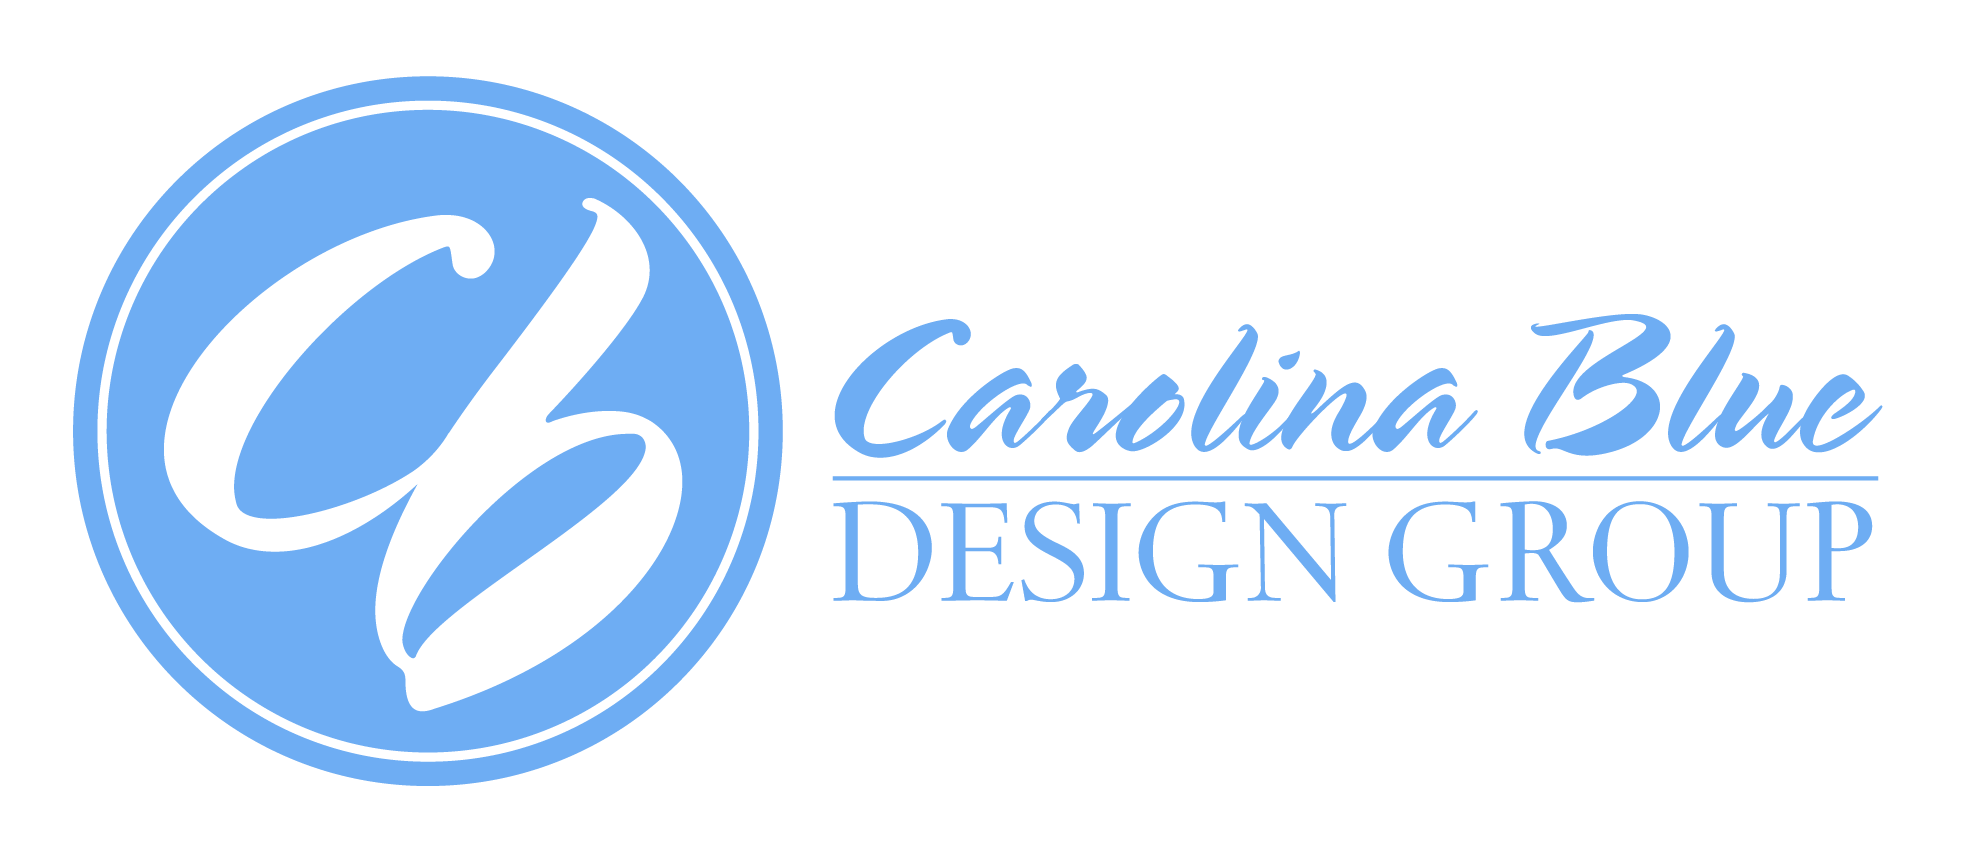 Carolina Blue Design Group